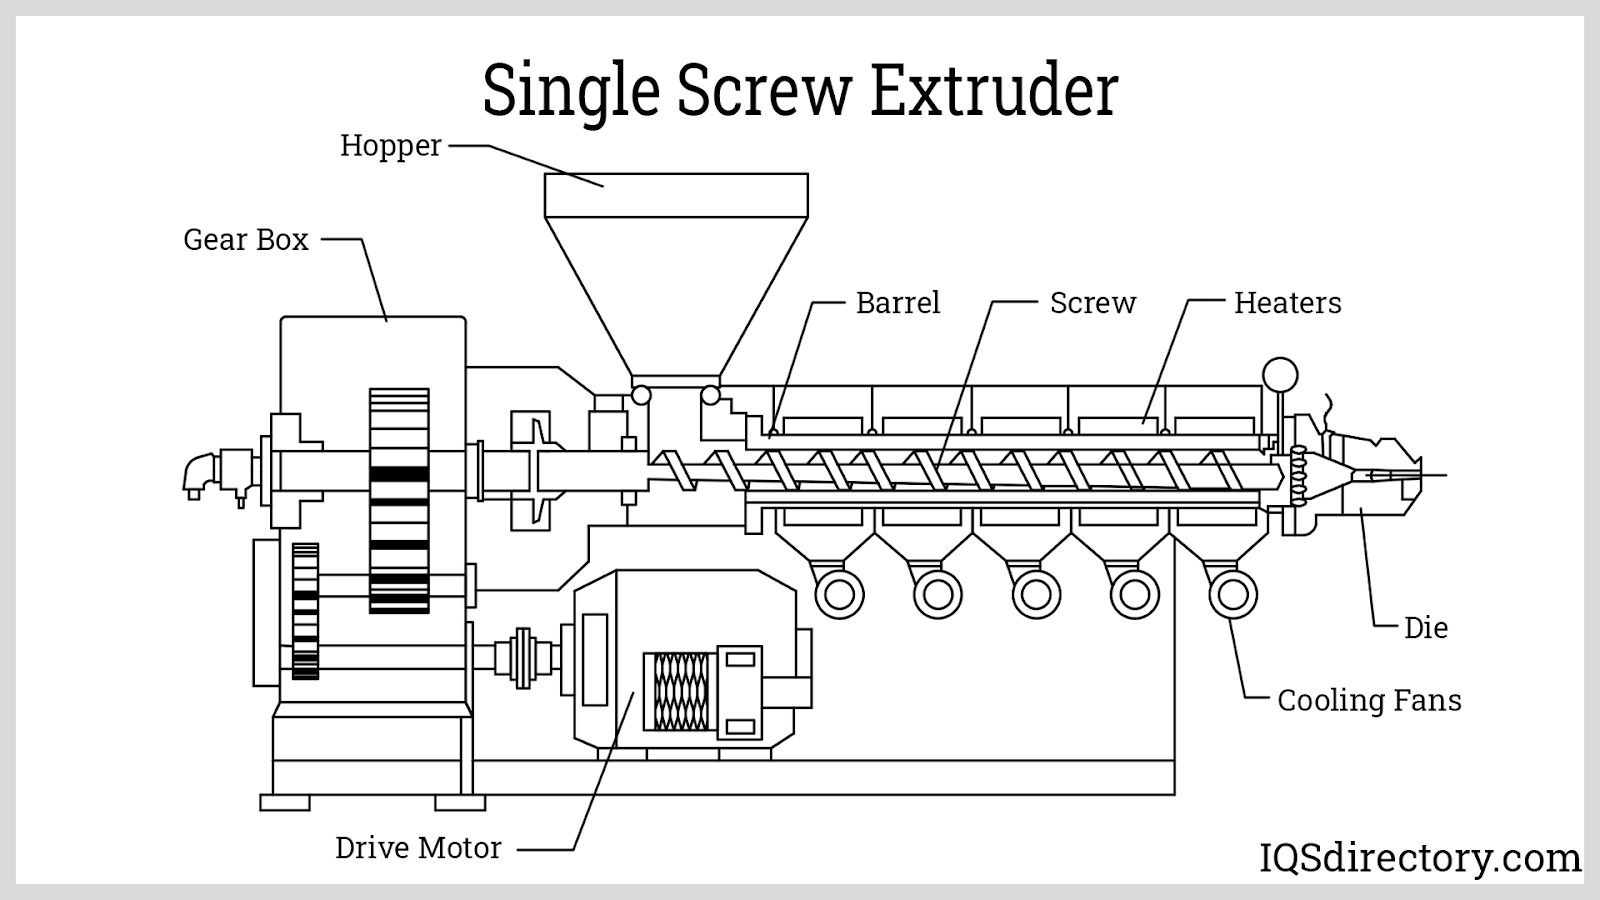 Single Screw Extruder